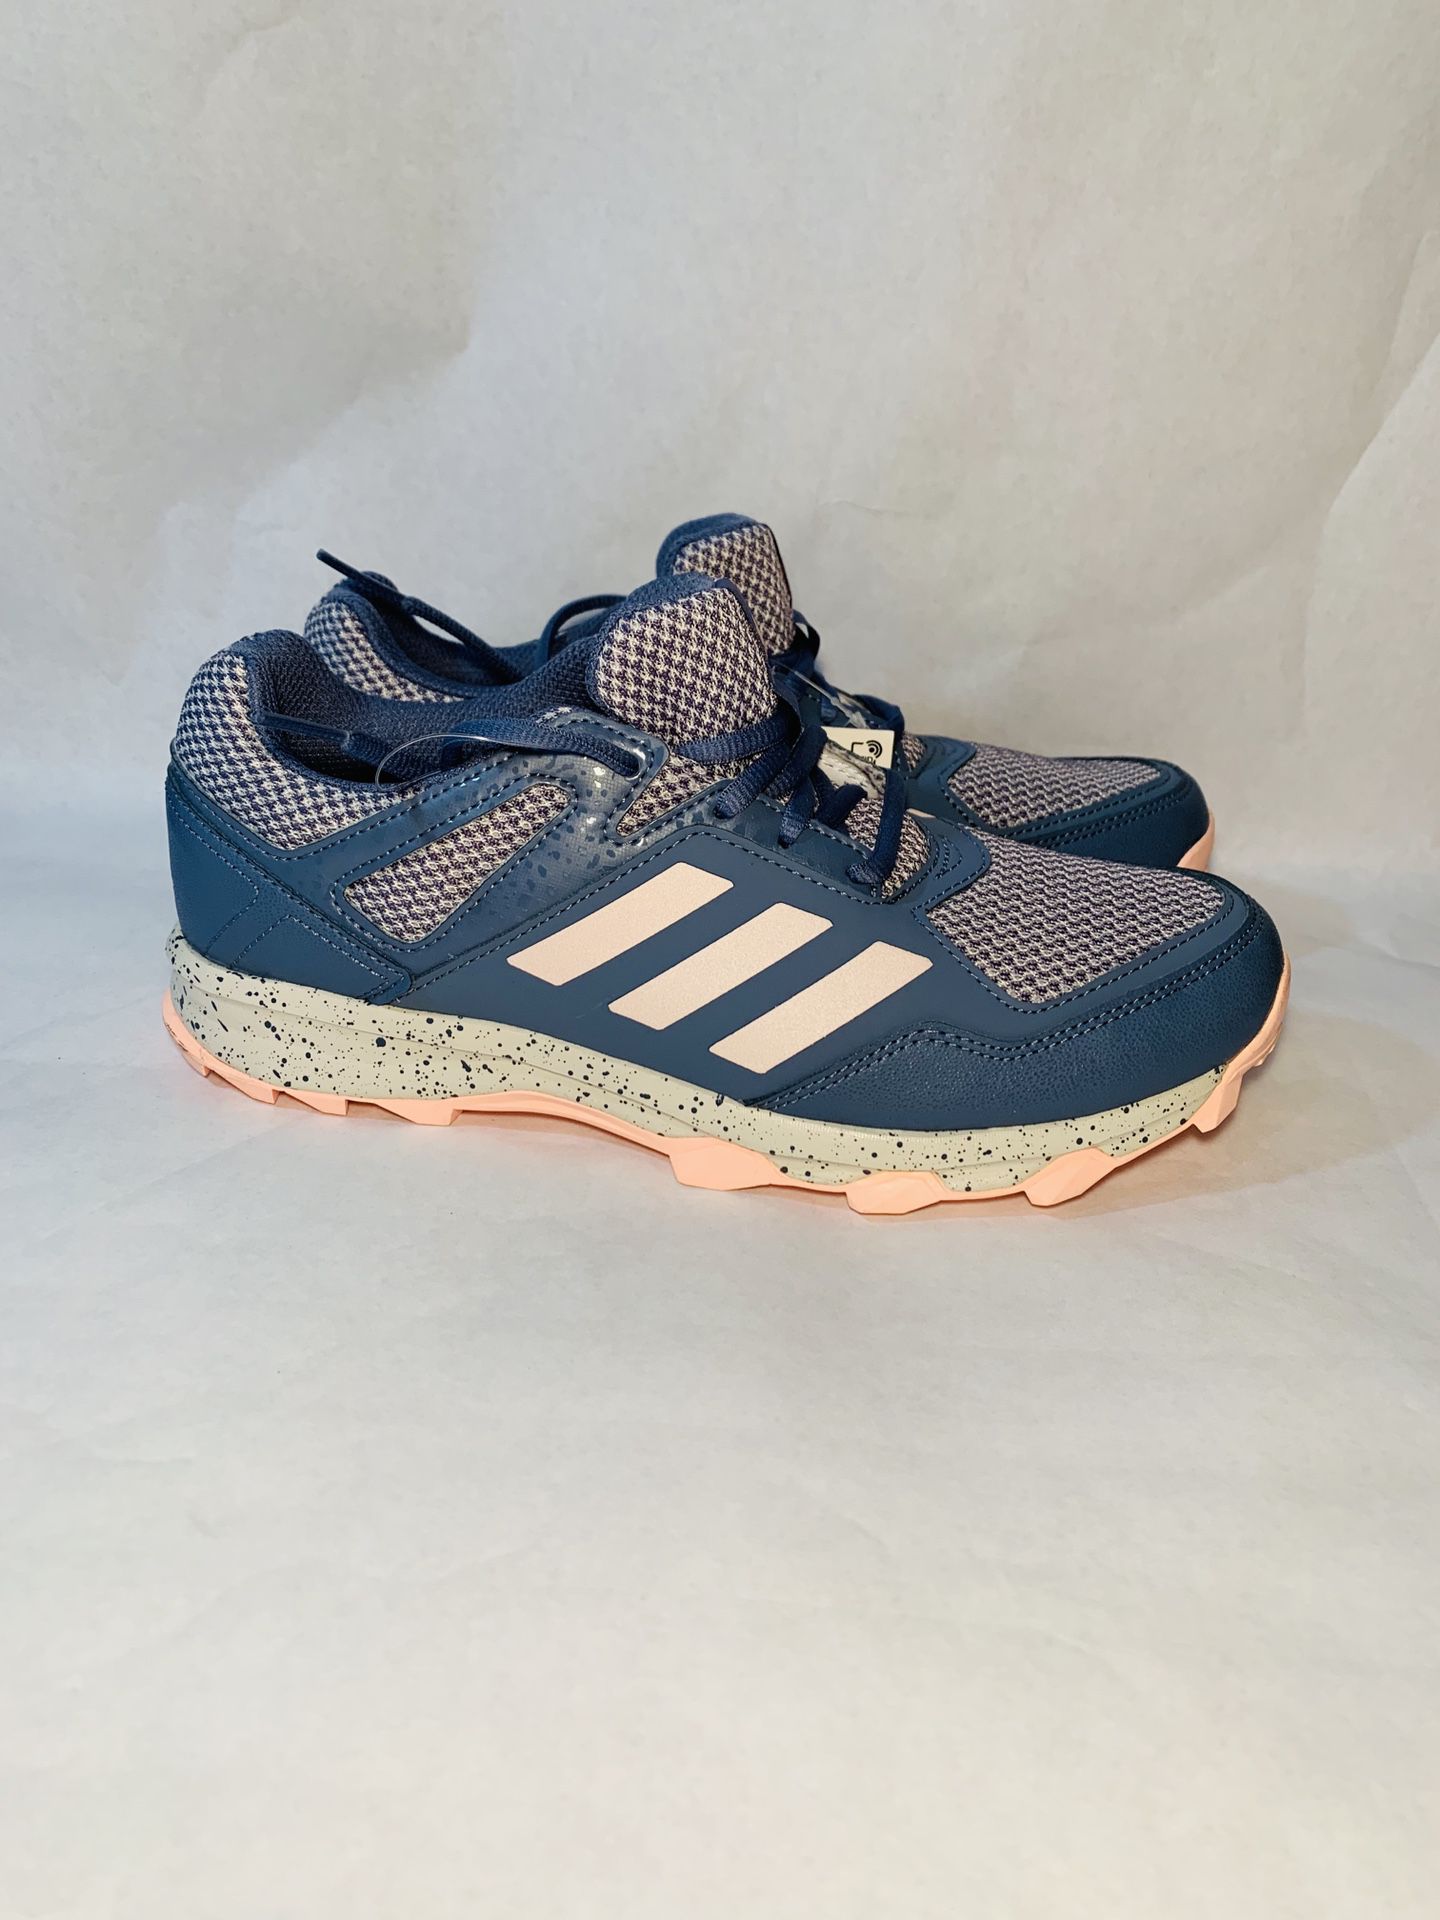 New Adidas Fabela X Boost Size 12 Field Hockey Shoes Denim Blue Pink AC8788